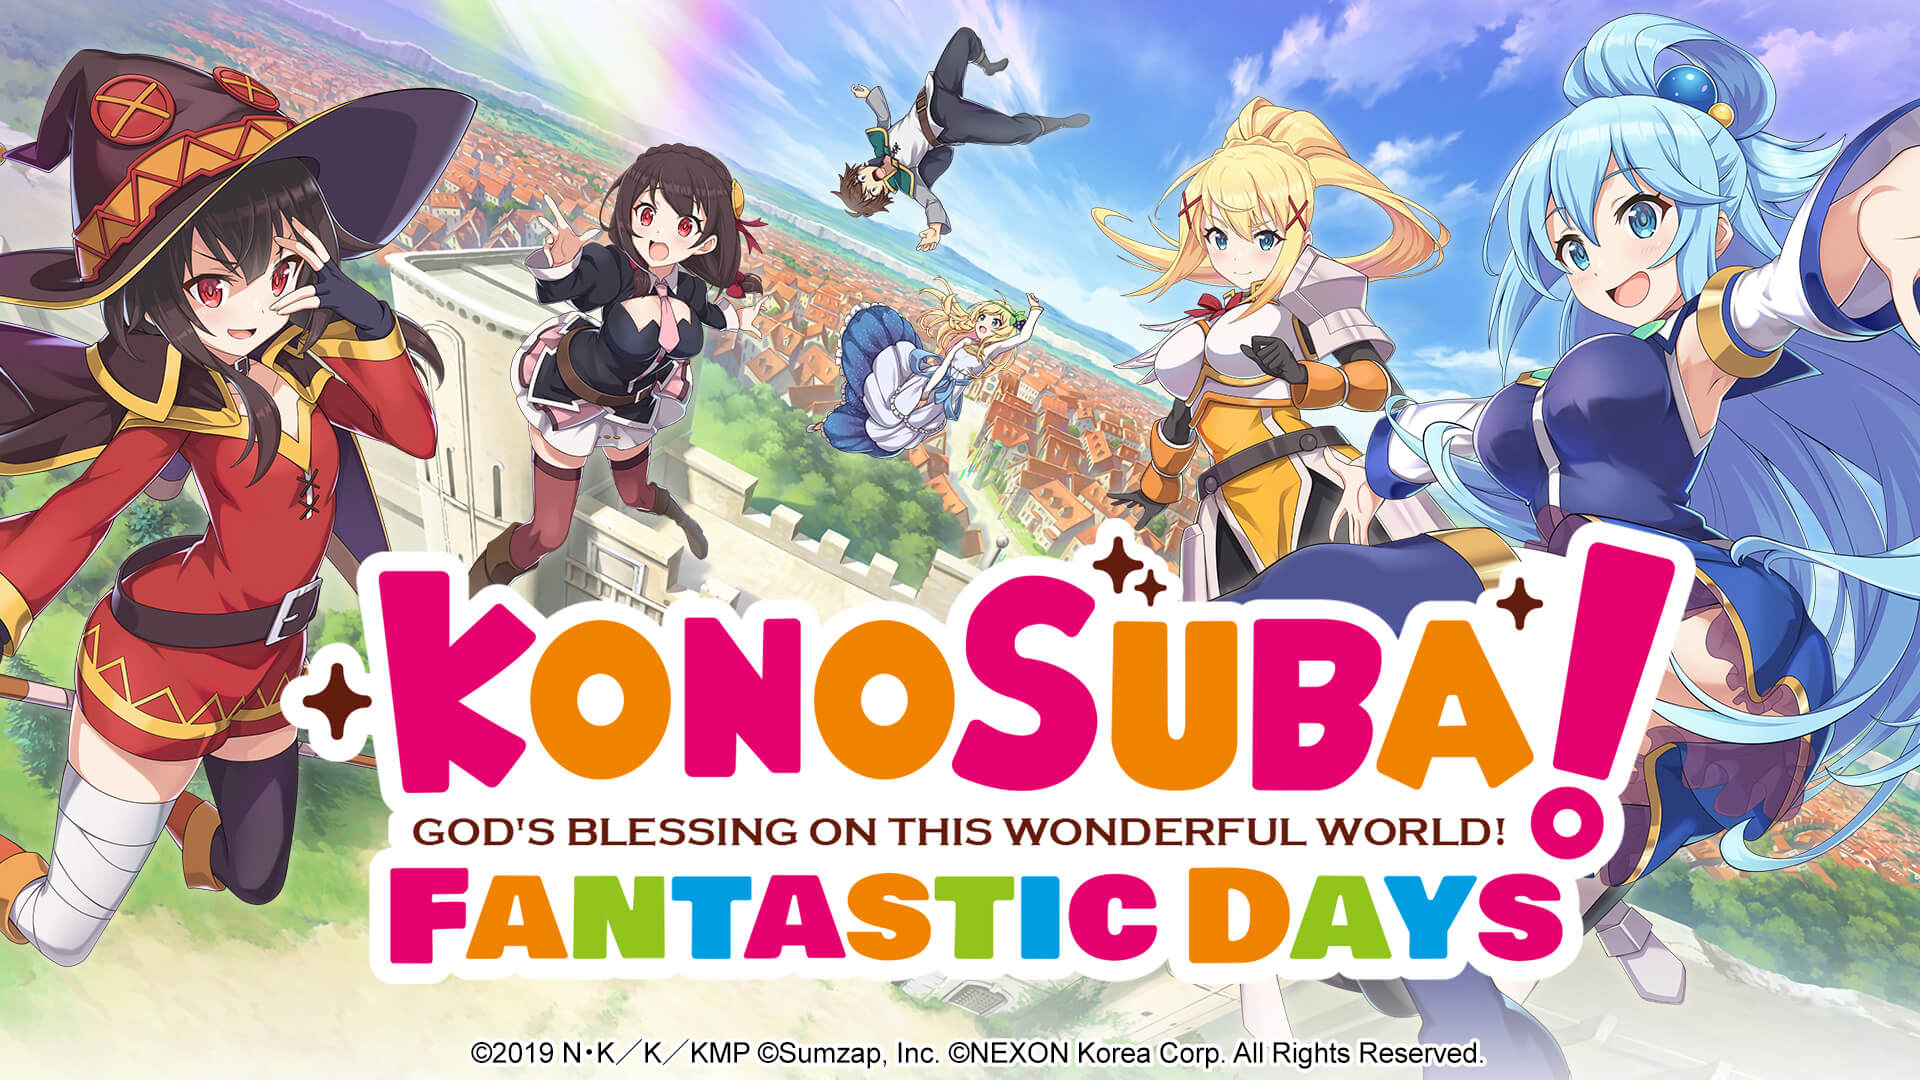 Konosuba season 3 reveals new key visual ahead of premiere